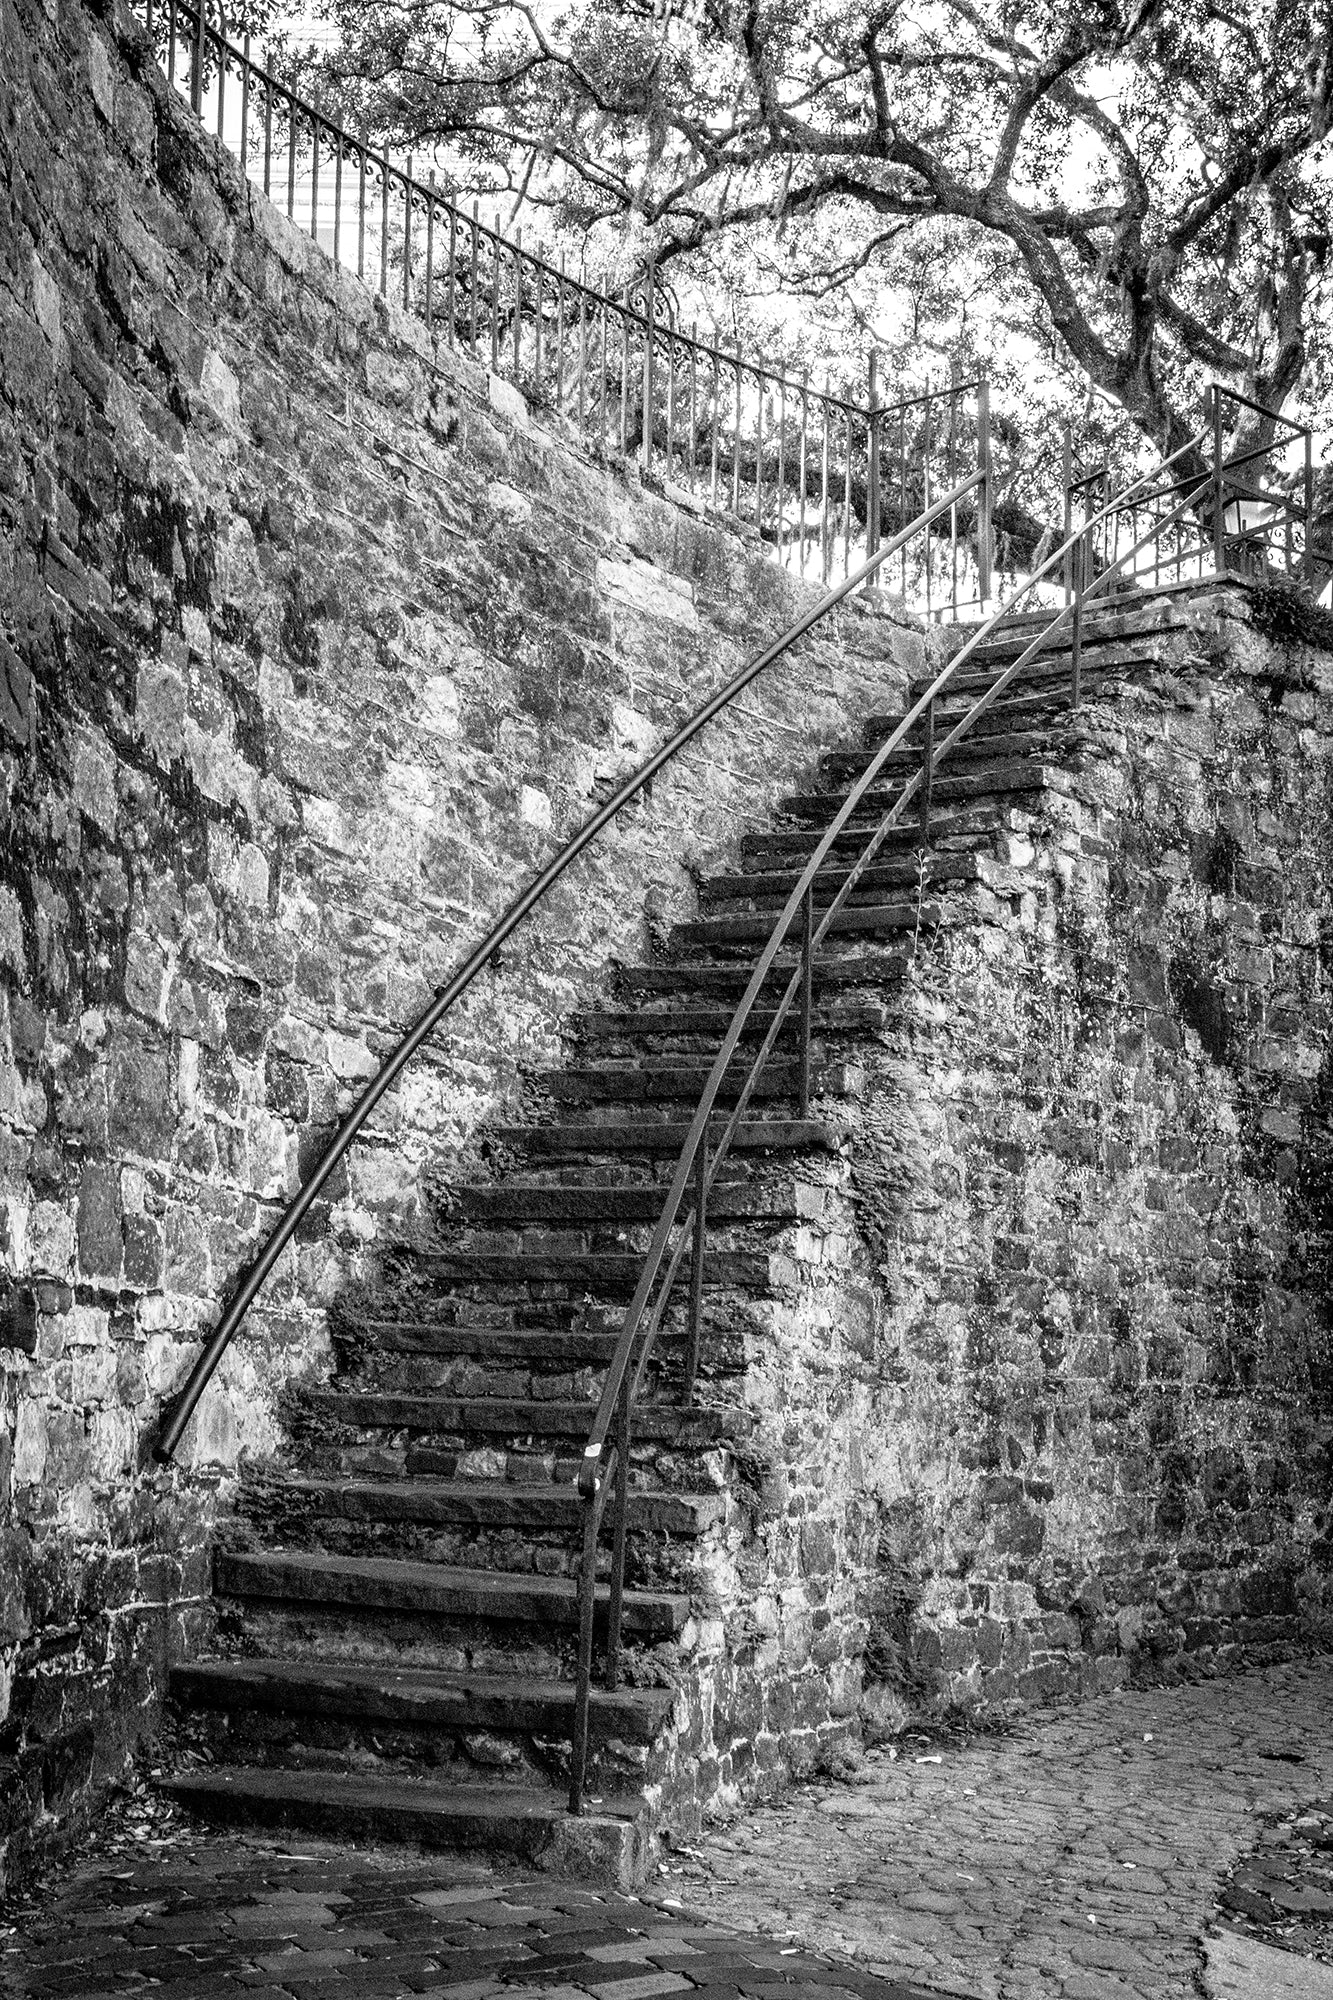 Black and White Old Stone Stairs River Street Savannah Ga Loose Wall Art Print